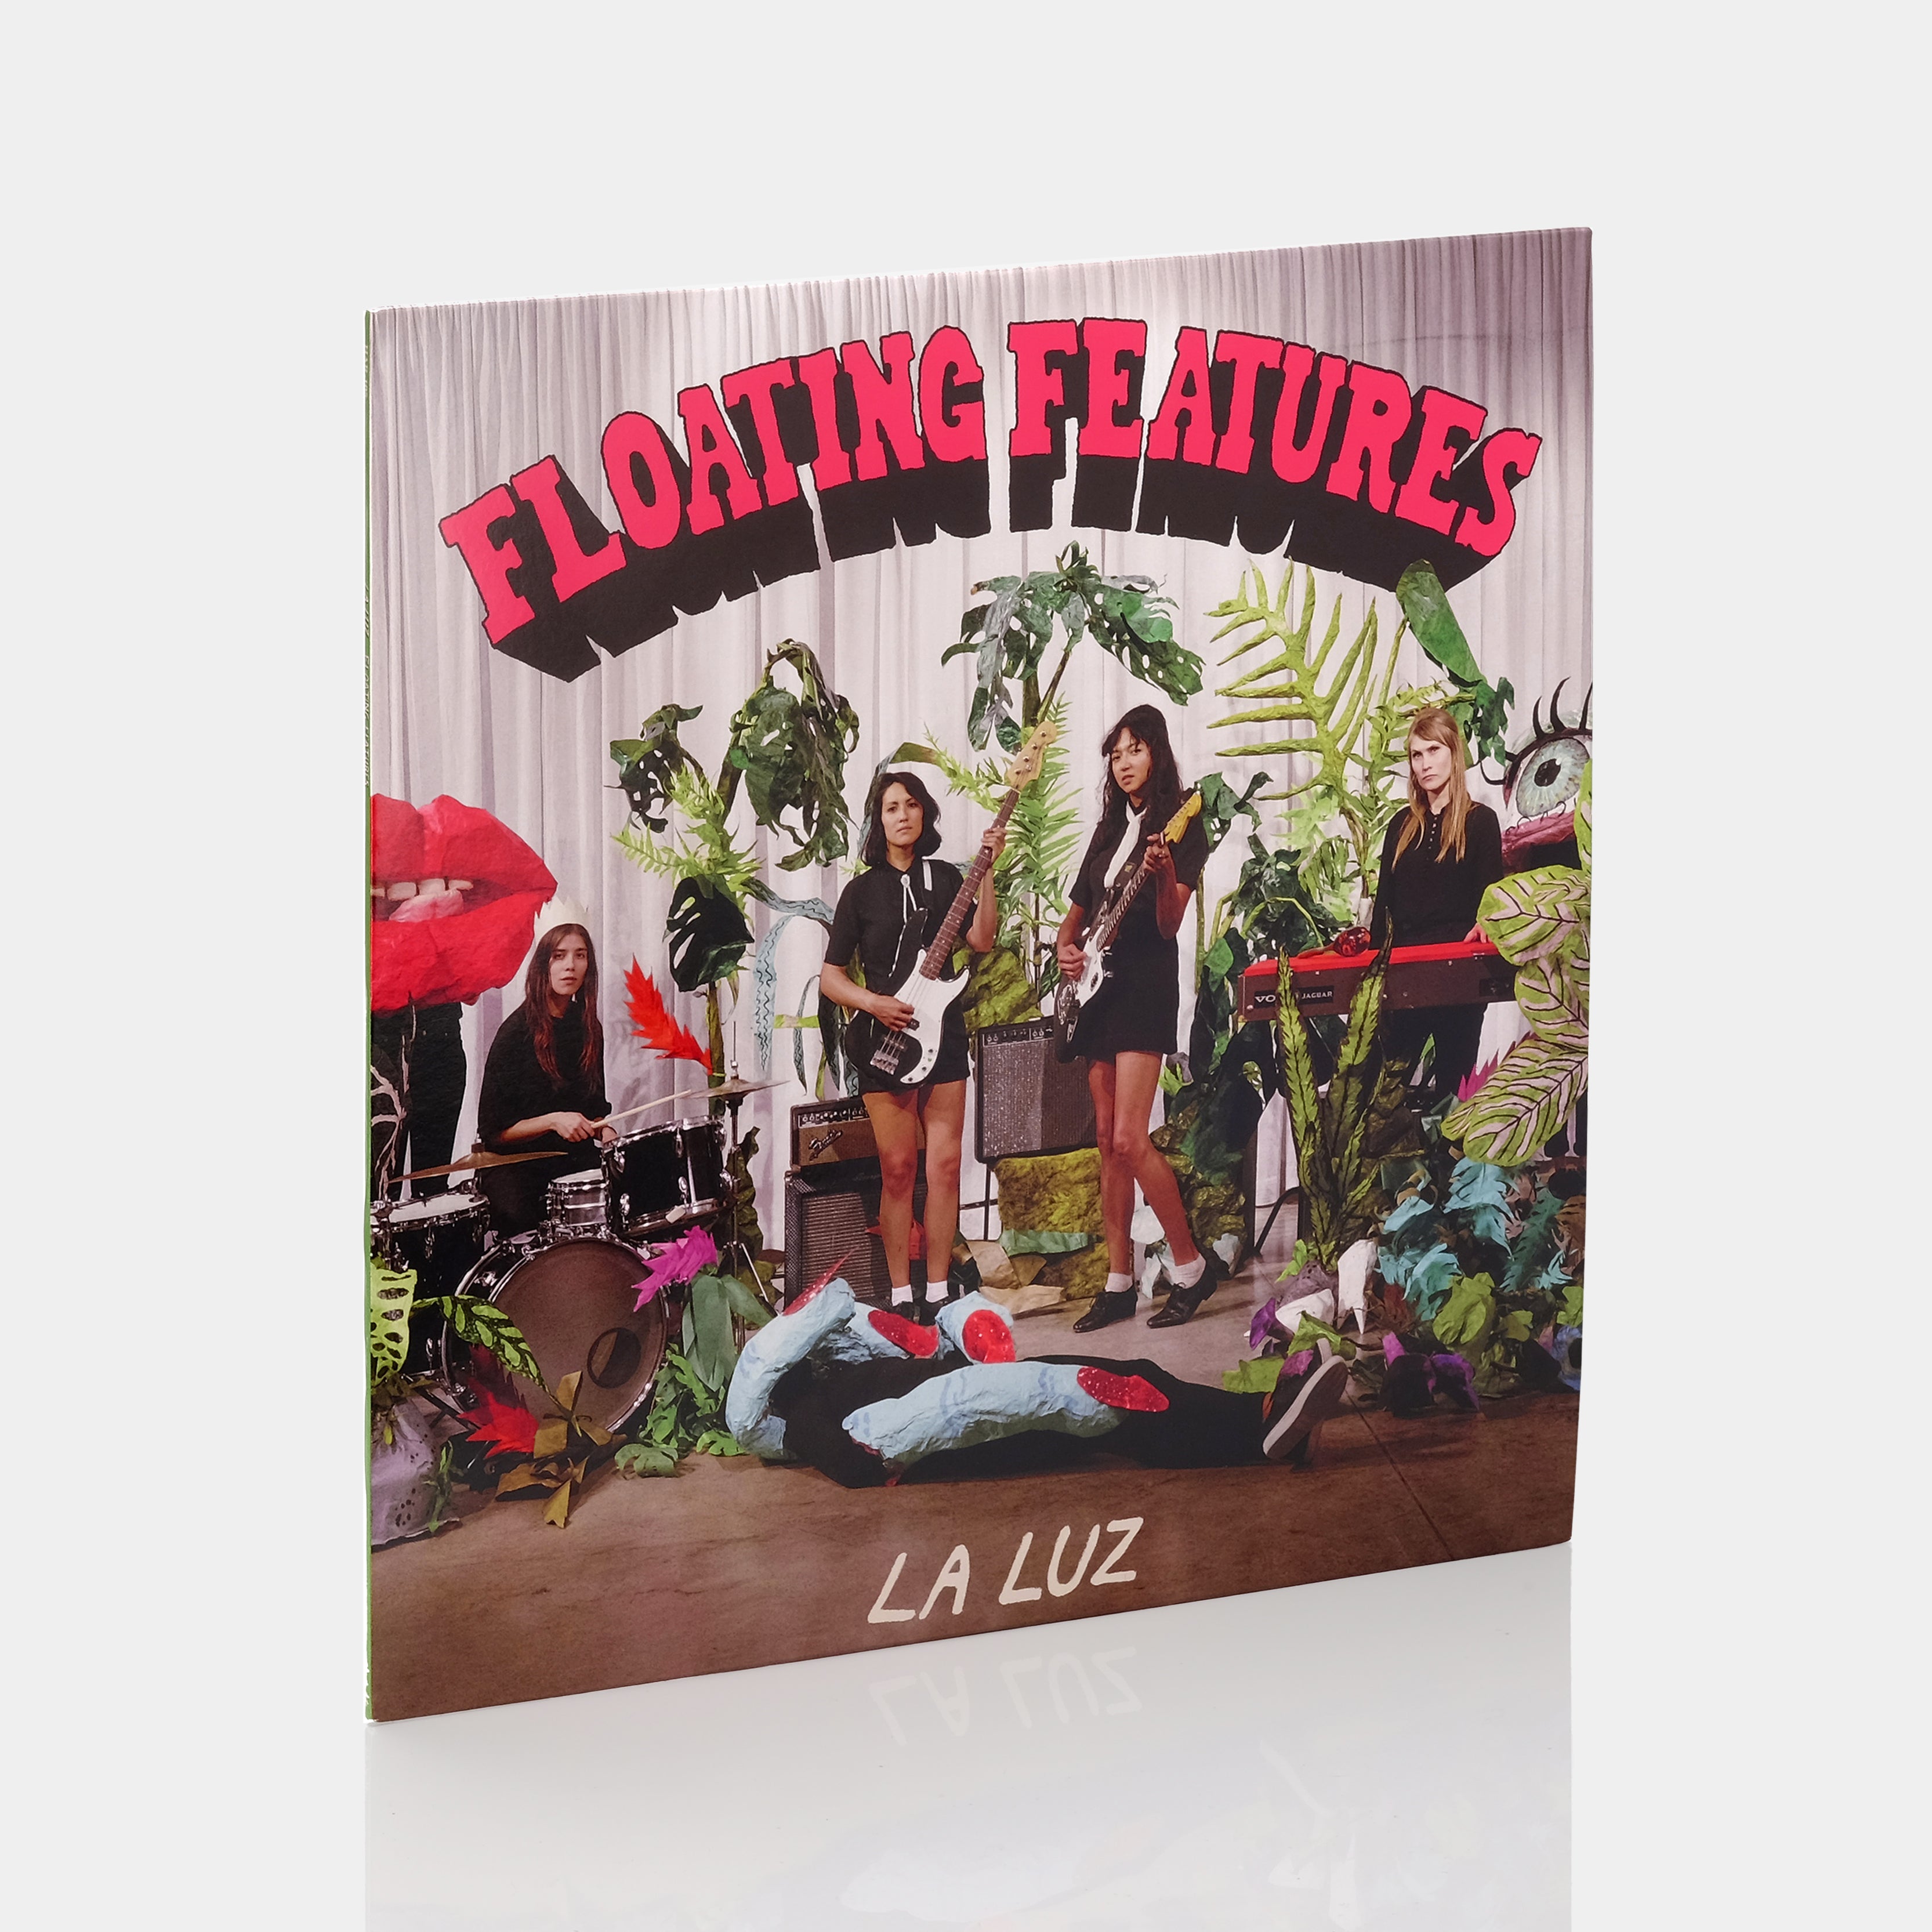 La Luz - Floating Features LP Vinyl Record